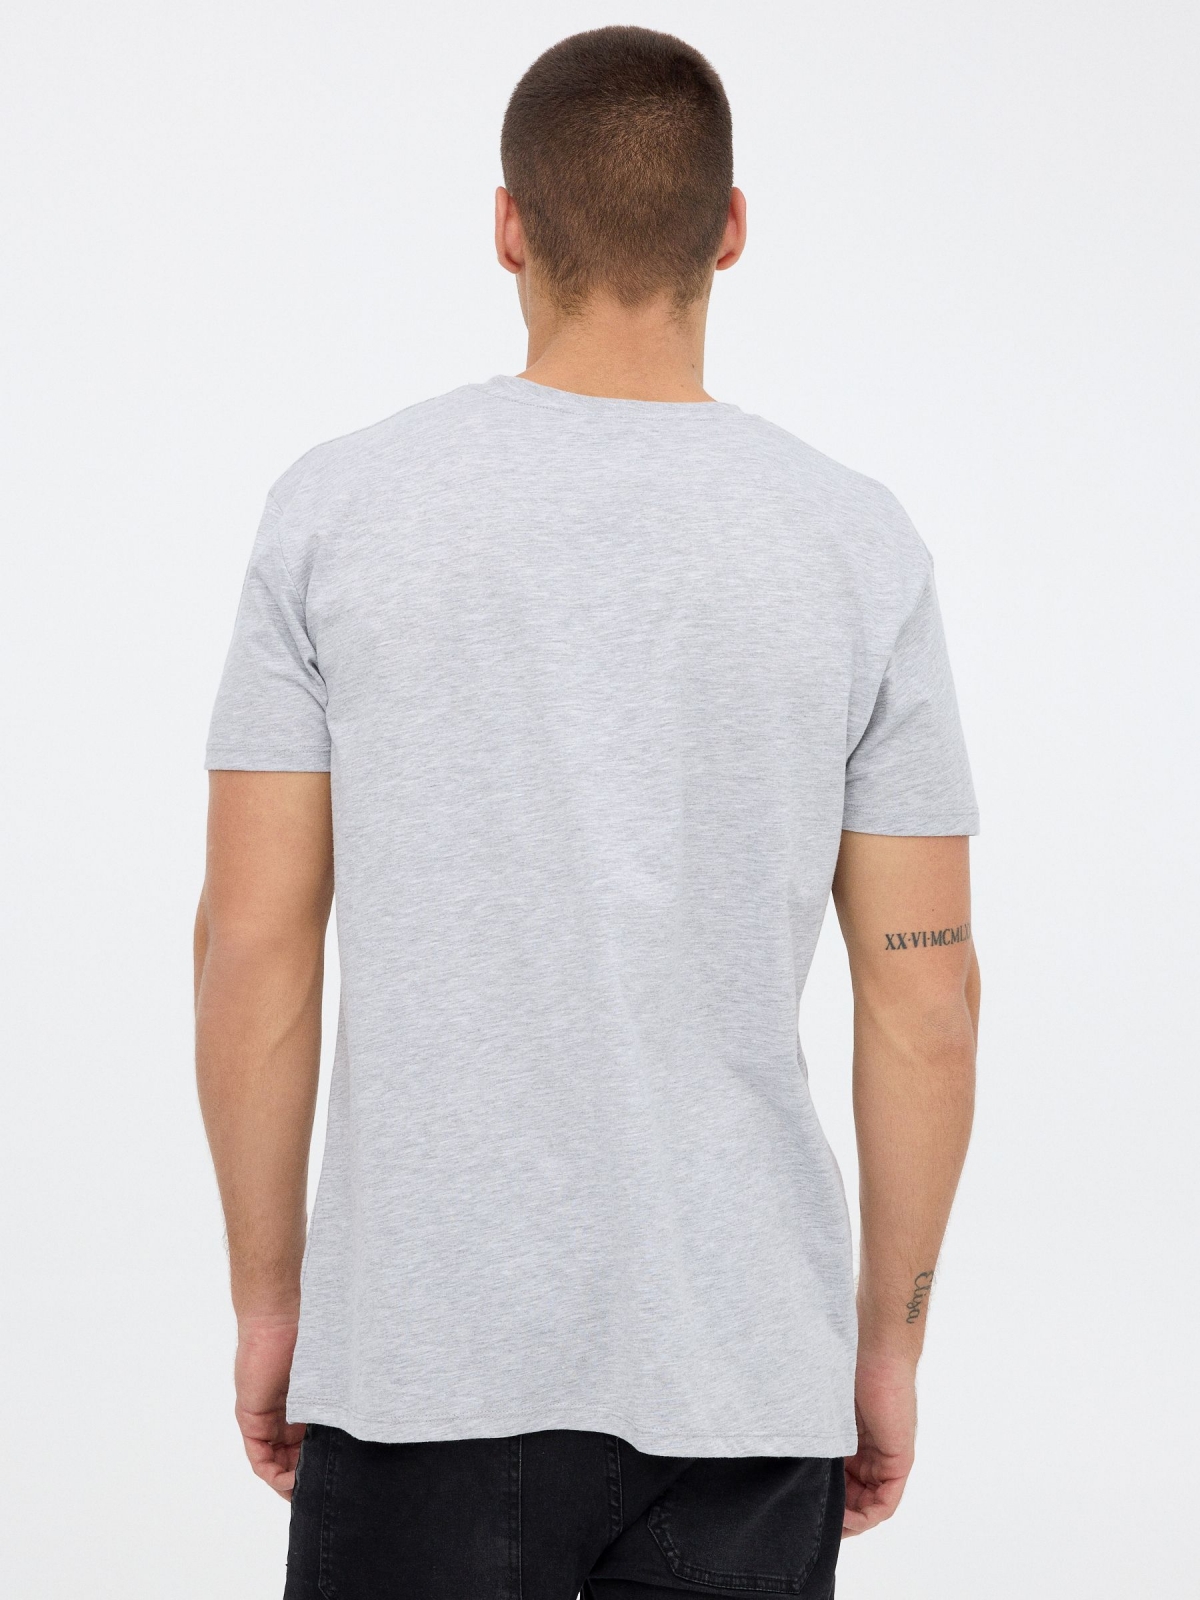 Camiseta Mandalorian gris vista media trasera